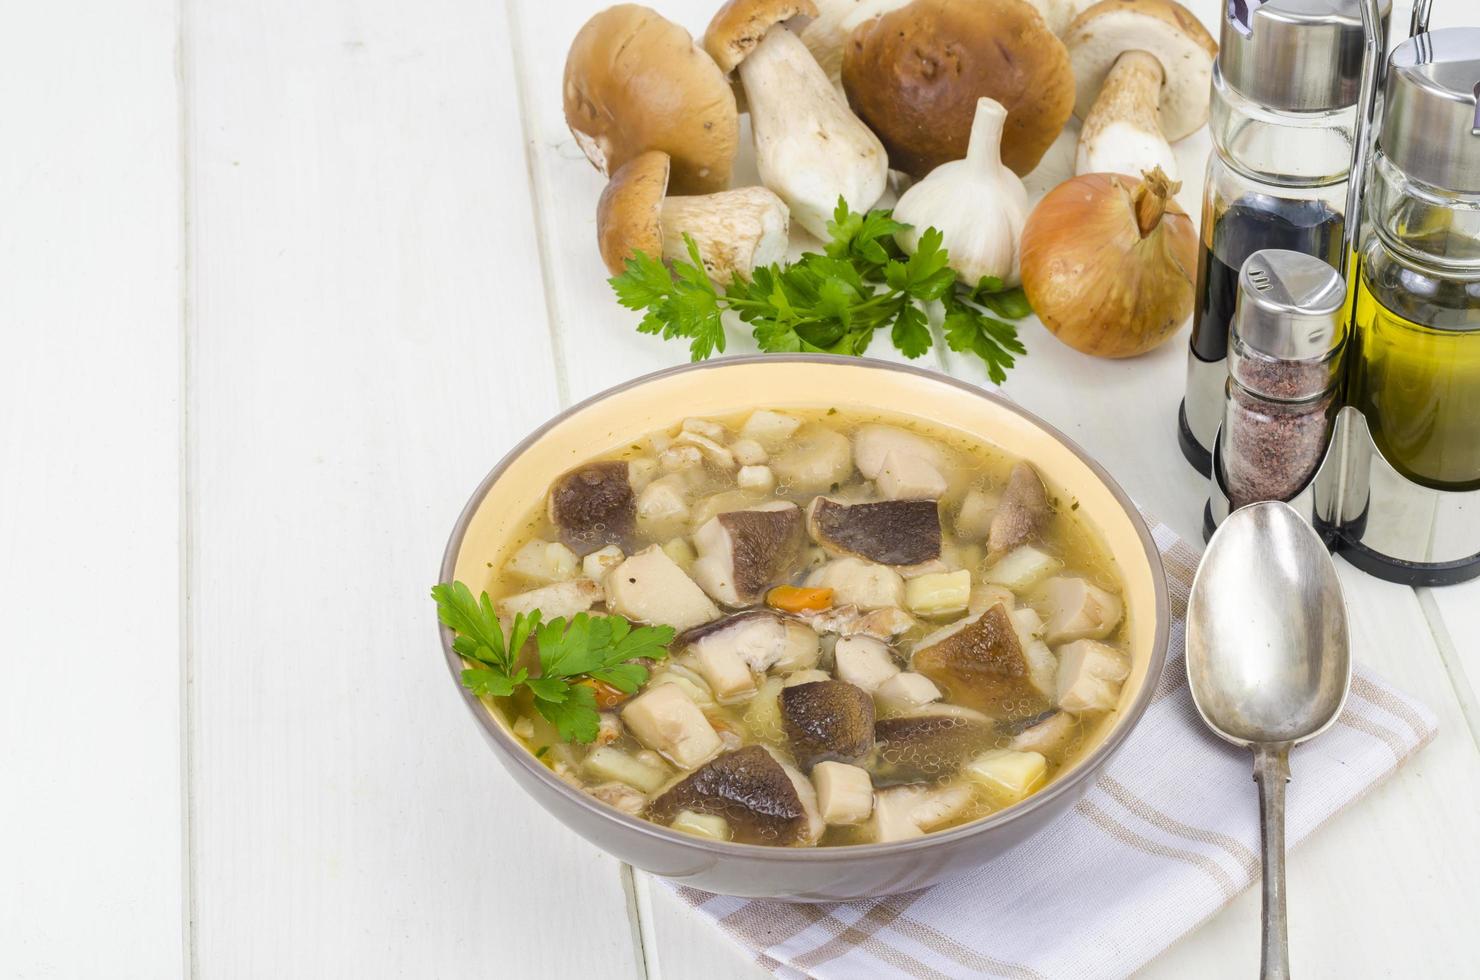 Tazón de sopa de hongos porcini comestibles del bosque en la mesa de madera foto